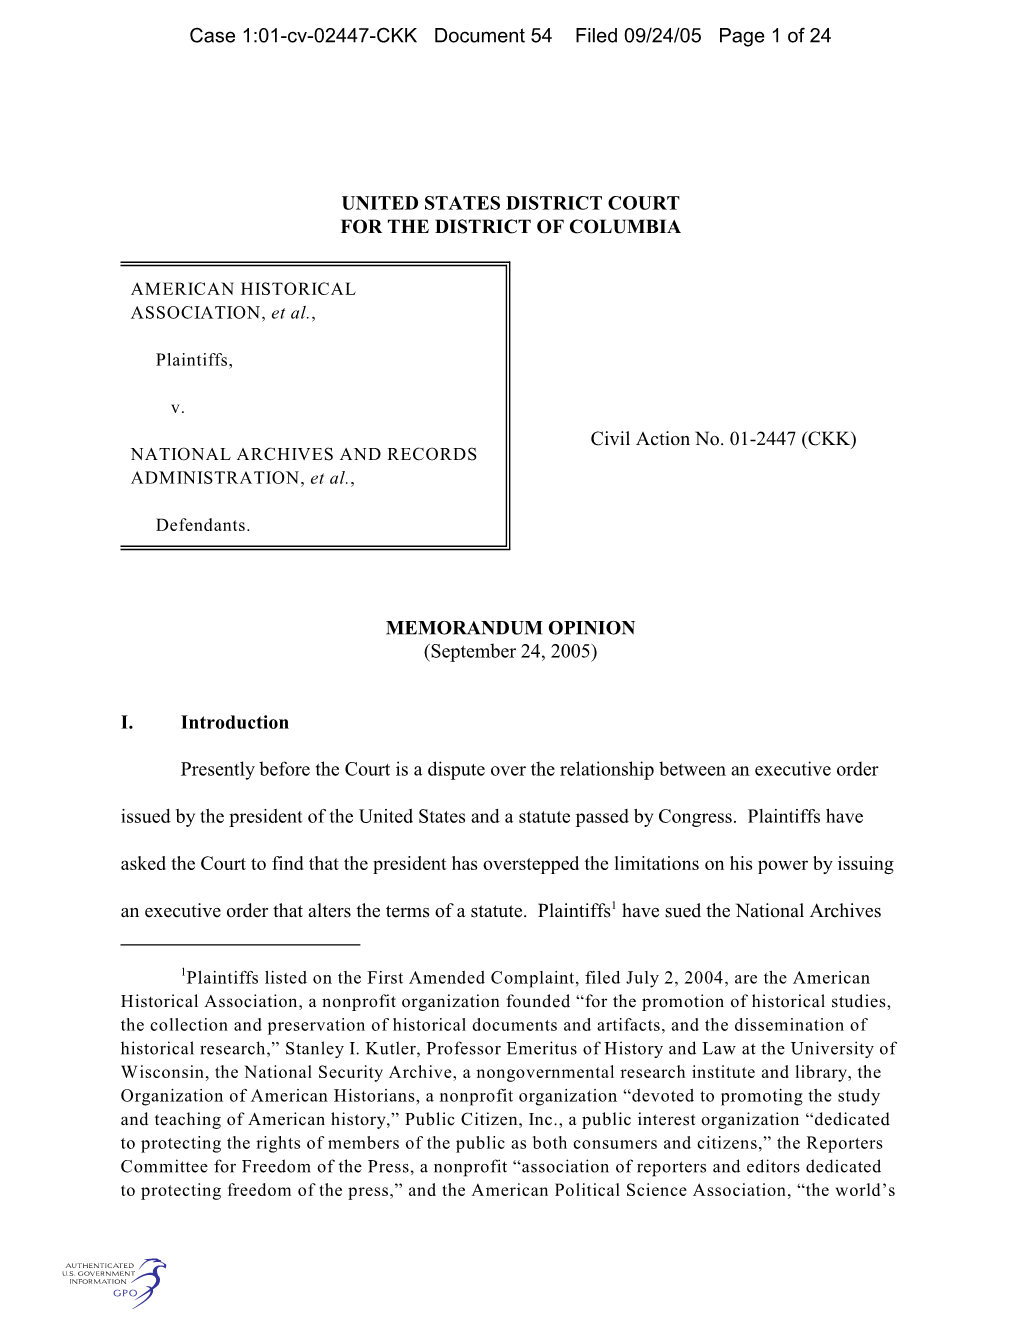 Case 1:01-Cv-02447-CKK Document 54 Filed 09/24/05 Page 1 of 24